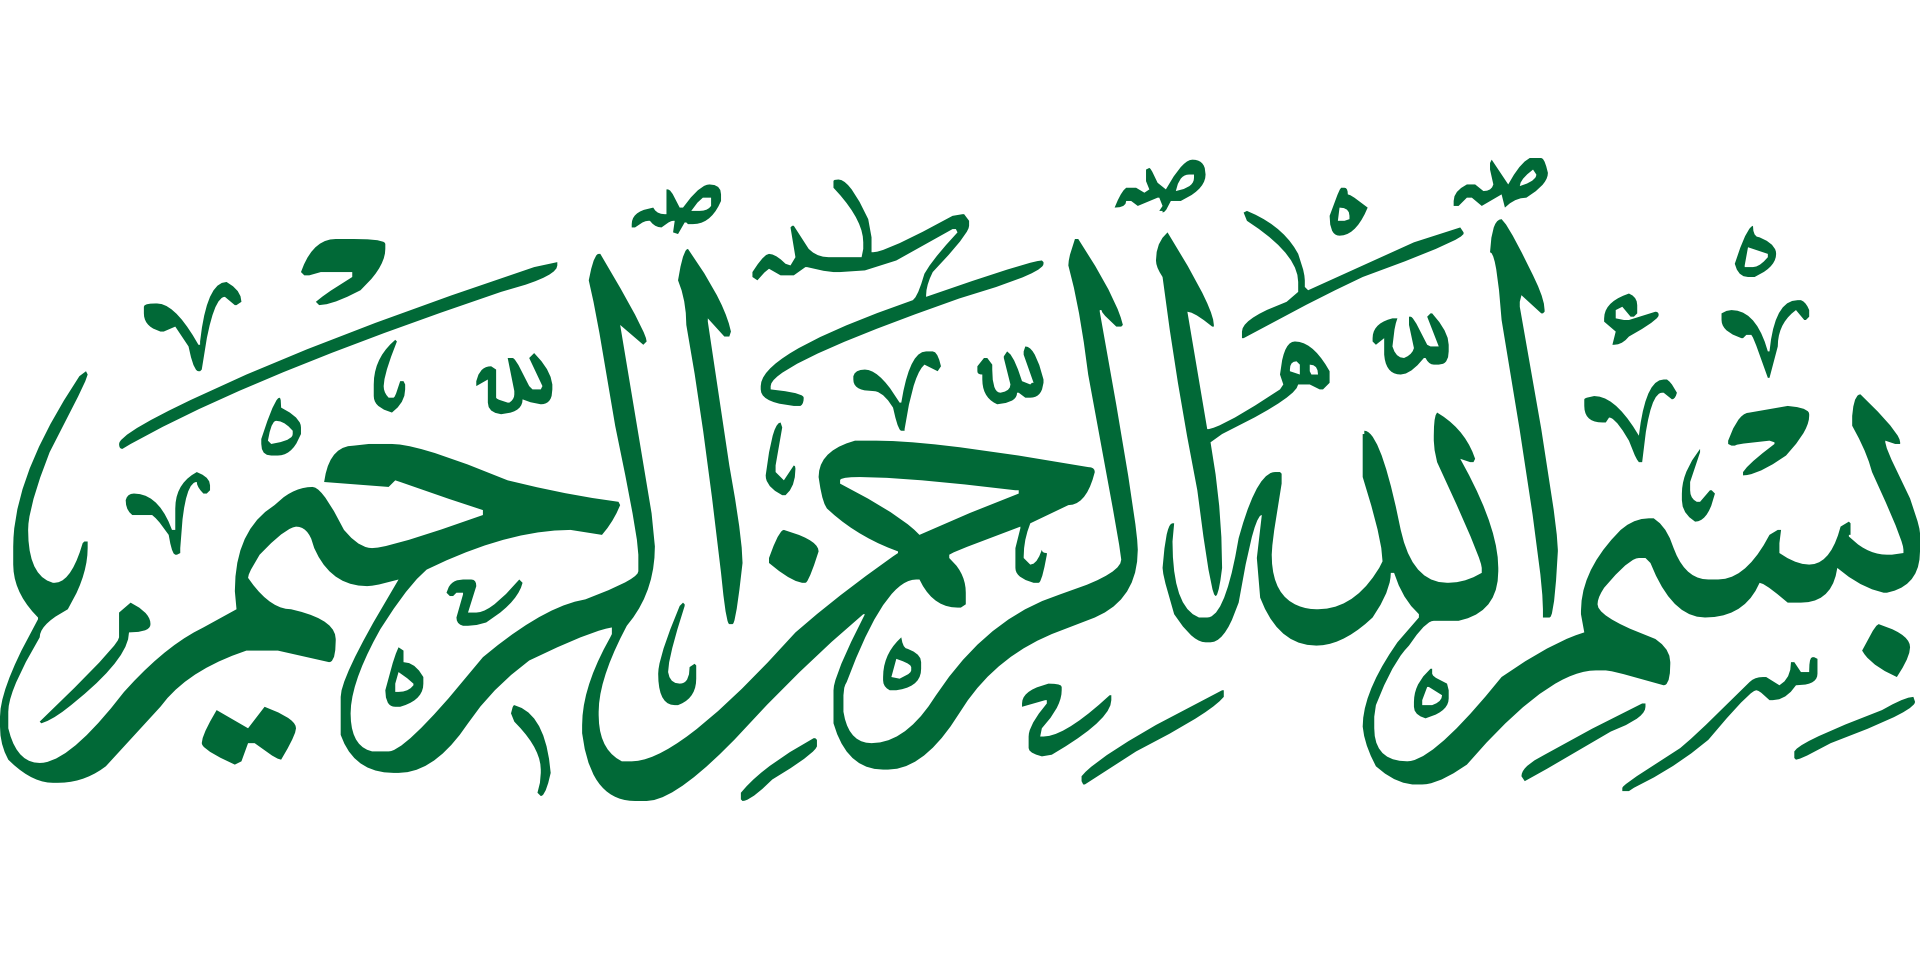 Аль 4 буквы. Бисмилла Рахман Рахим каллиграфия. Исламская каллиграфия Бисмиллях. Каллиграфия Бисмилла на арабском. Каллиграфия на арабском Бисмилляхи.